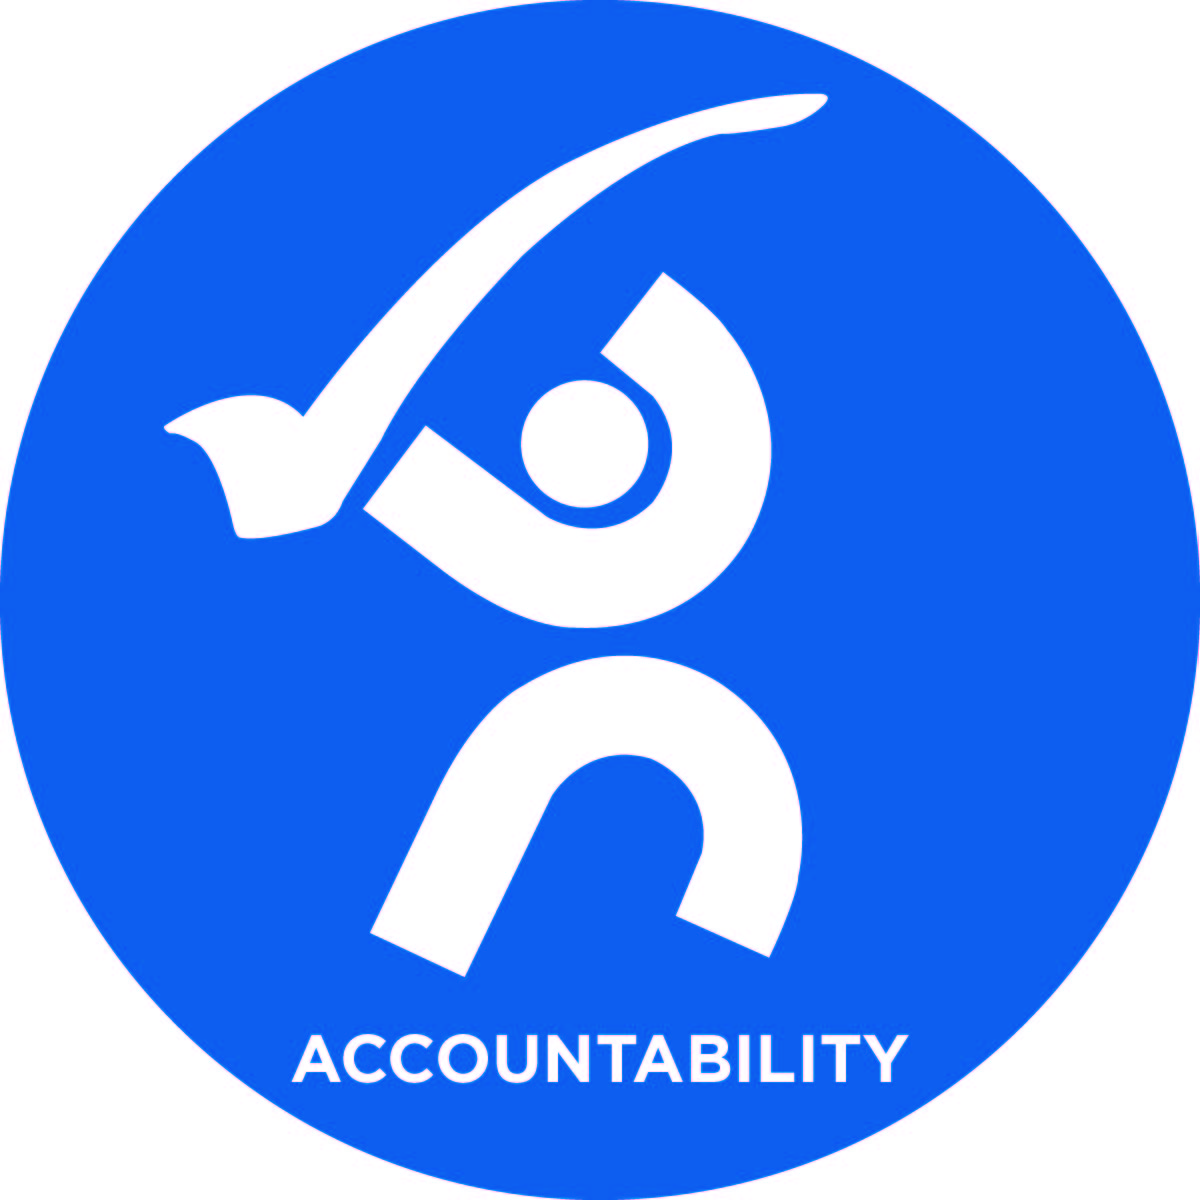 ISPE Core Values - Accountability